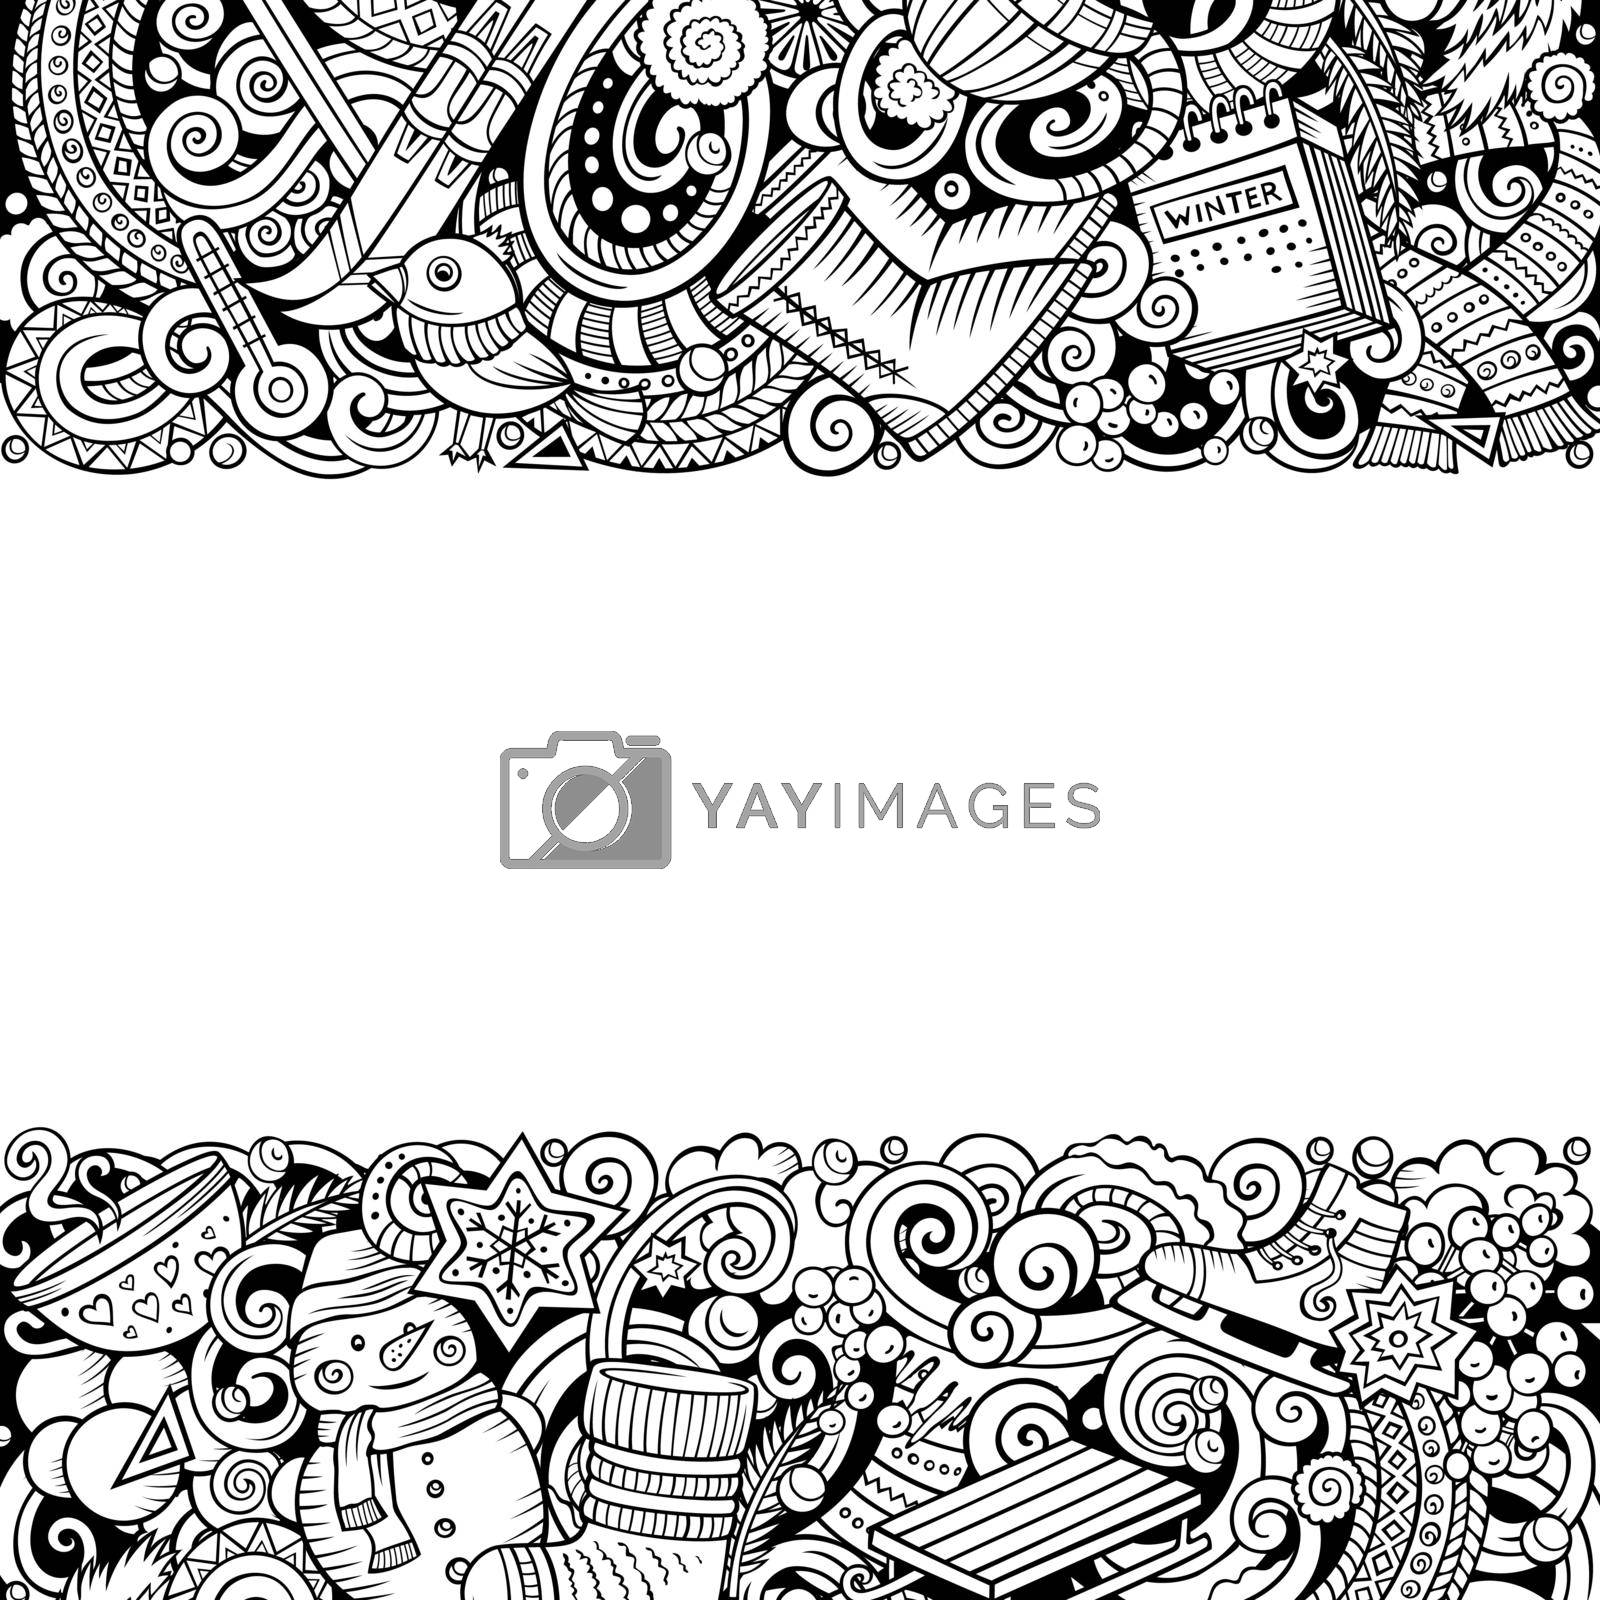 Royalty free image of Cartoon vector doodles Winter horizontal stripes card design by balabolka